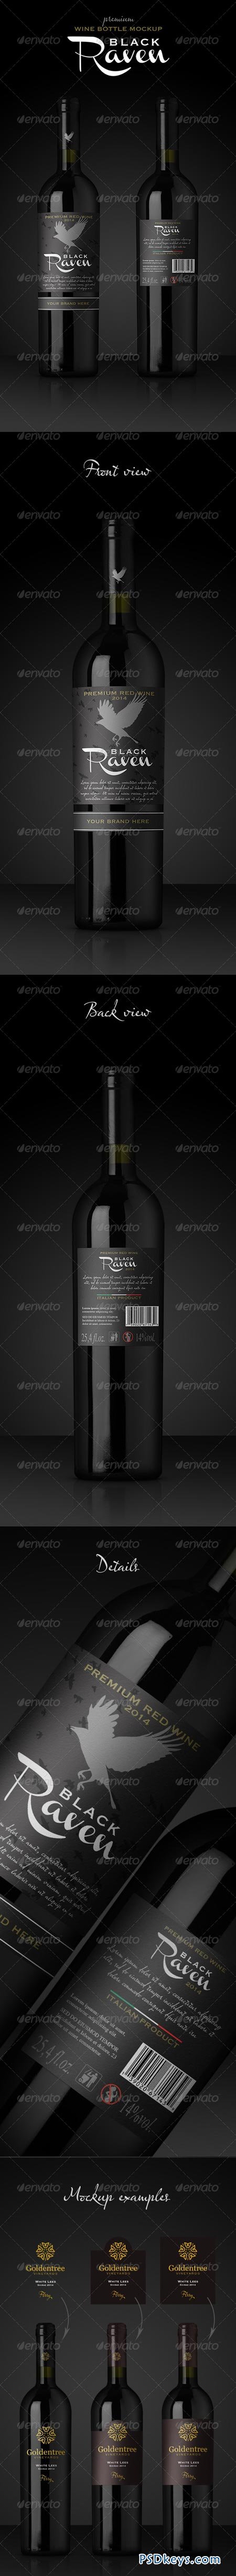 Premium Red Wine Mockup 6711653